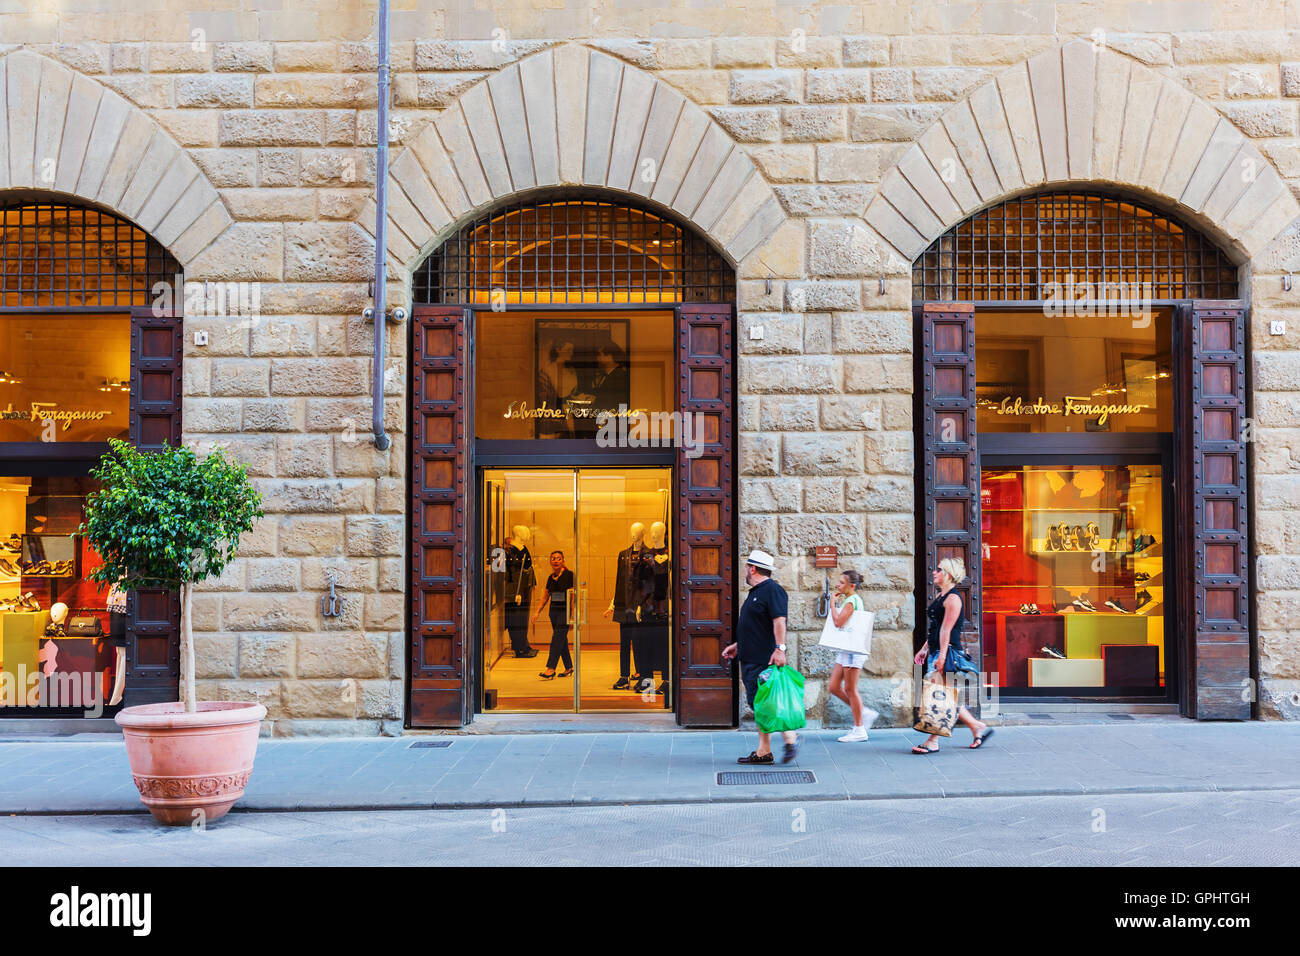 Salvatore Ferragamo shop in Florence, Italy Stock Photo - Alamy